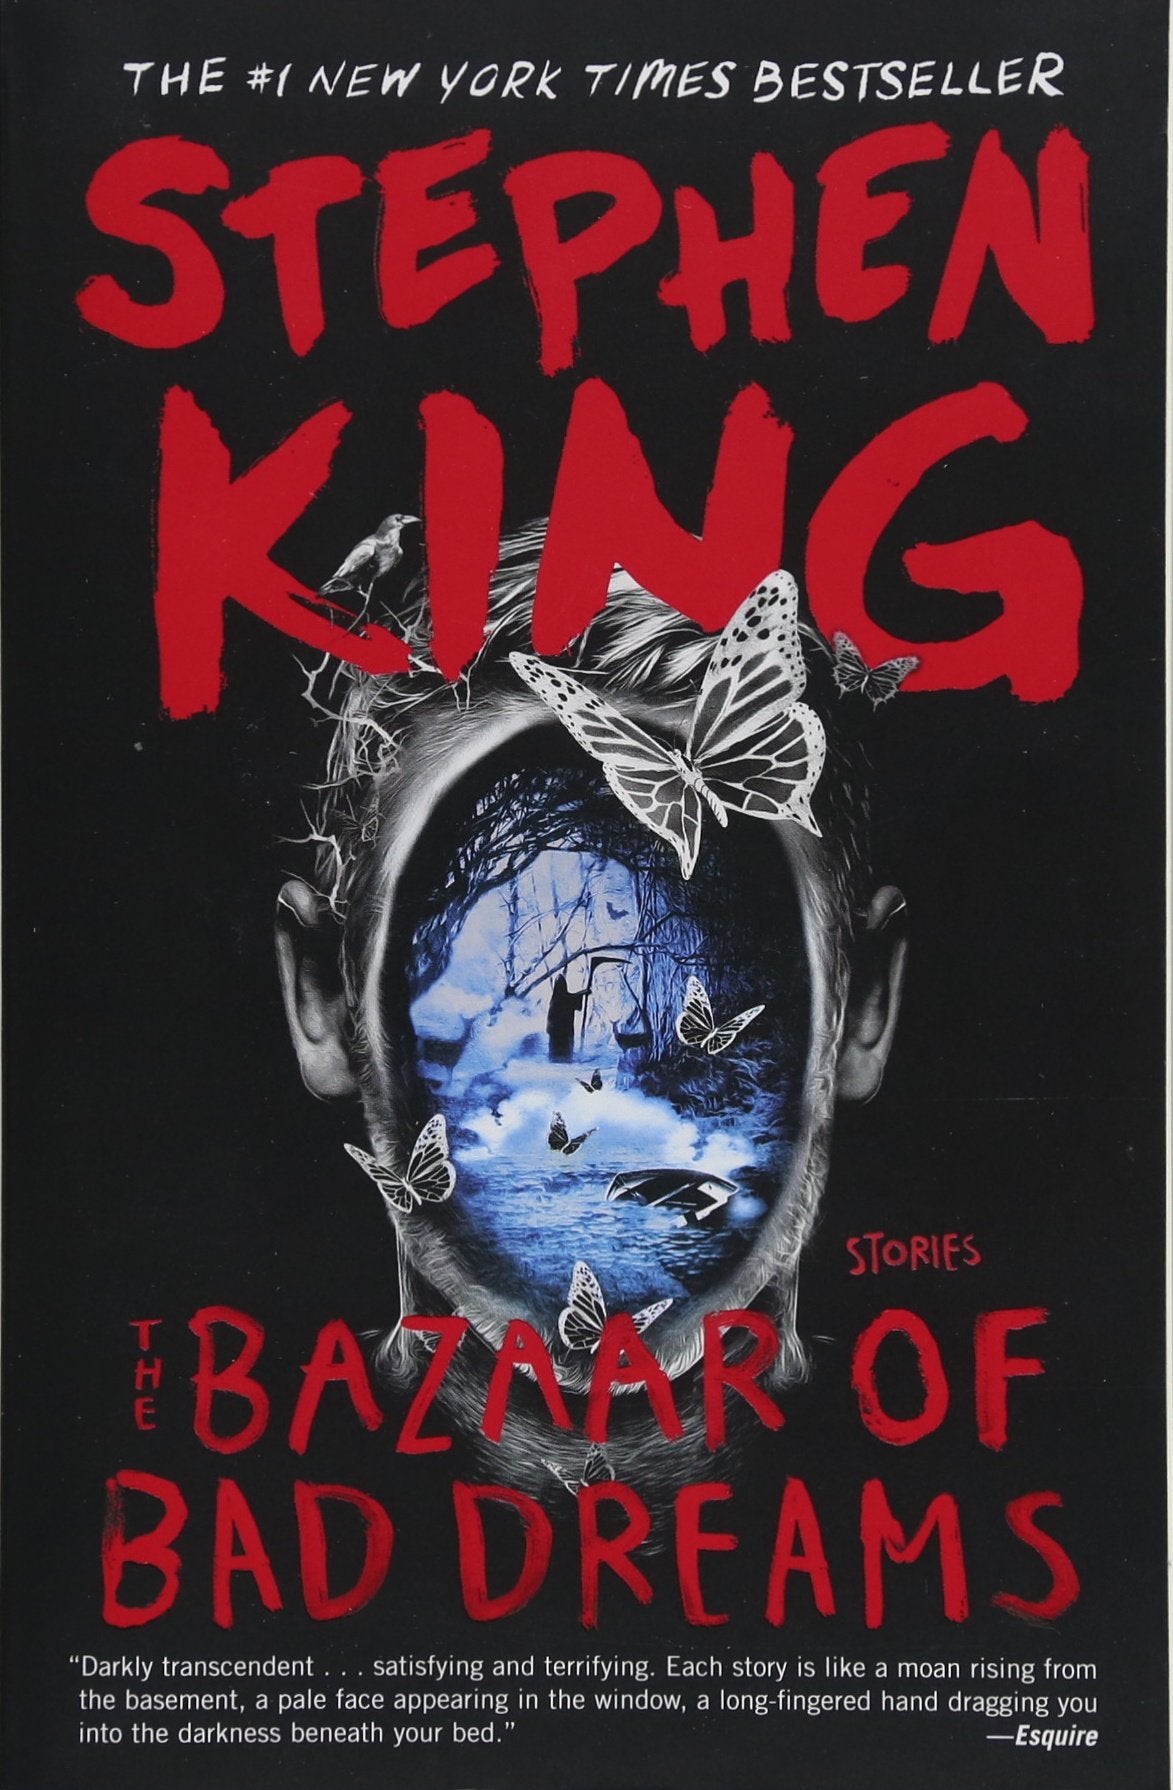 The Bazaar of Bad Dreams by Stephen King (Paperback) - LV'S Global Media